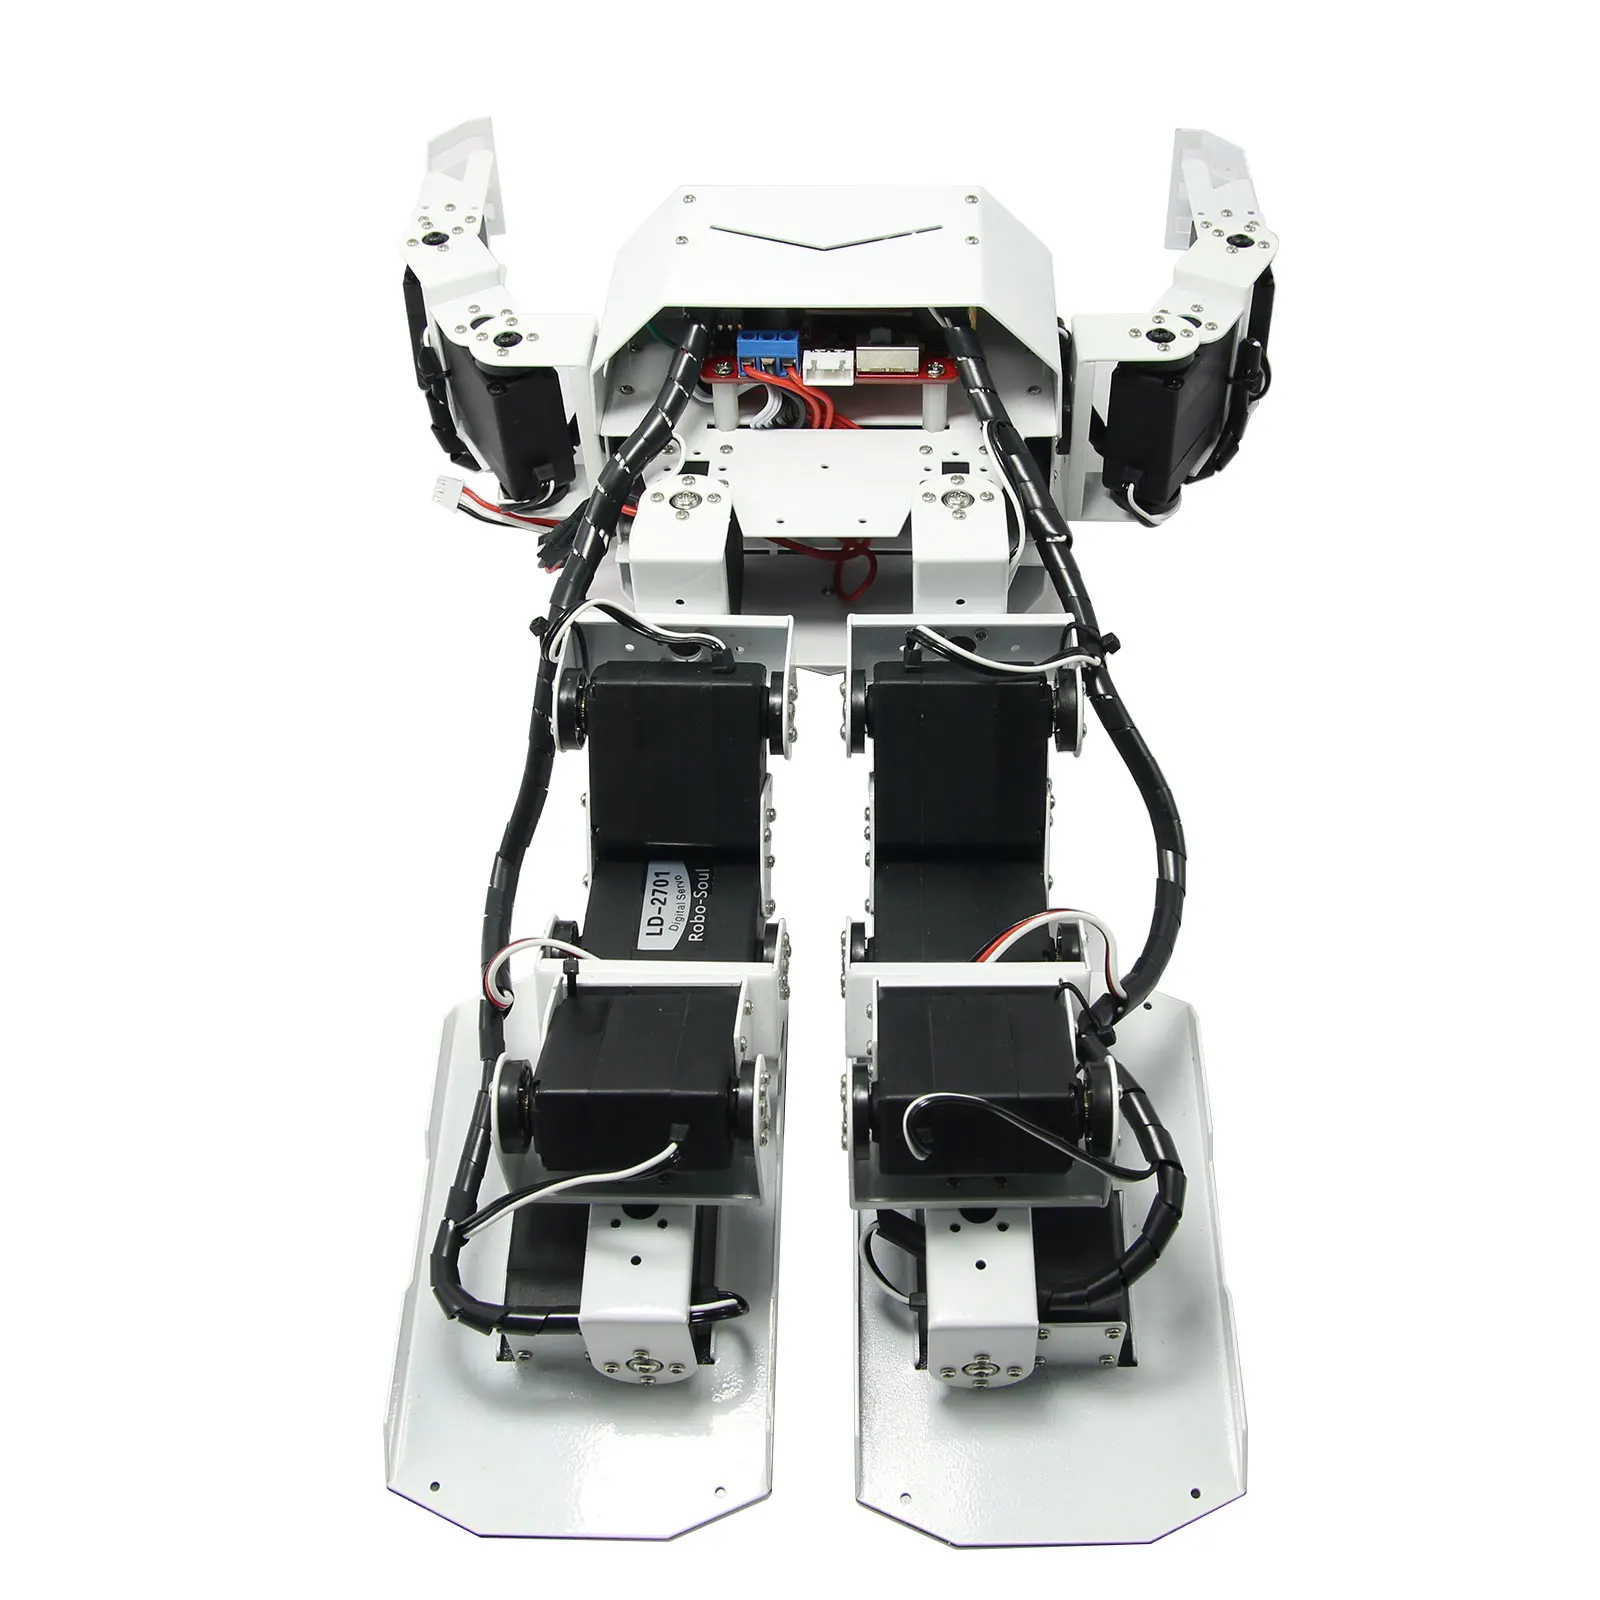 Biped Robtic 17DOF Robo-Soul H3.0 Two-Legged Human Robot Aluminum Frame kits Red 